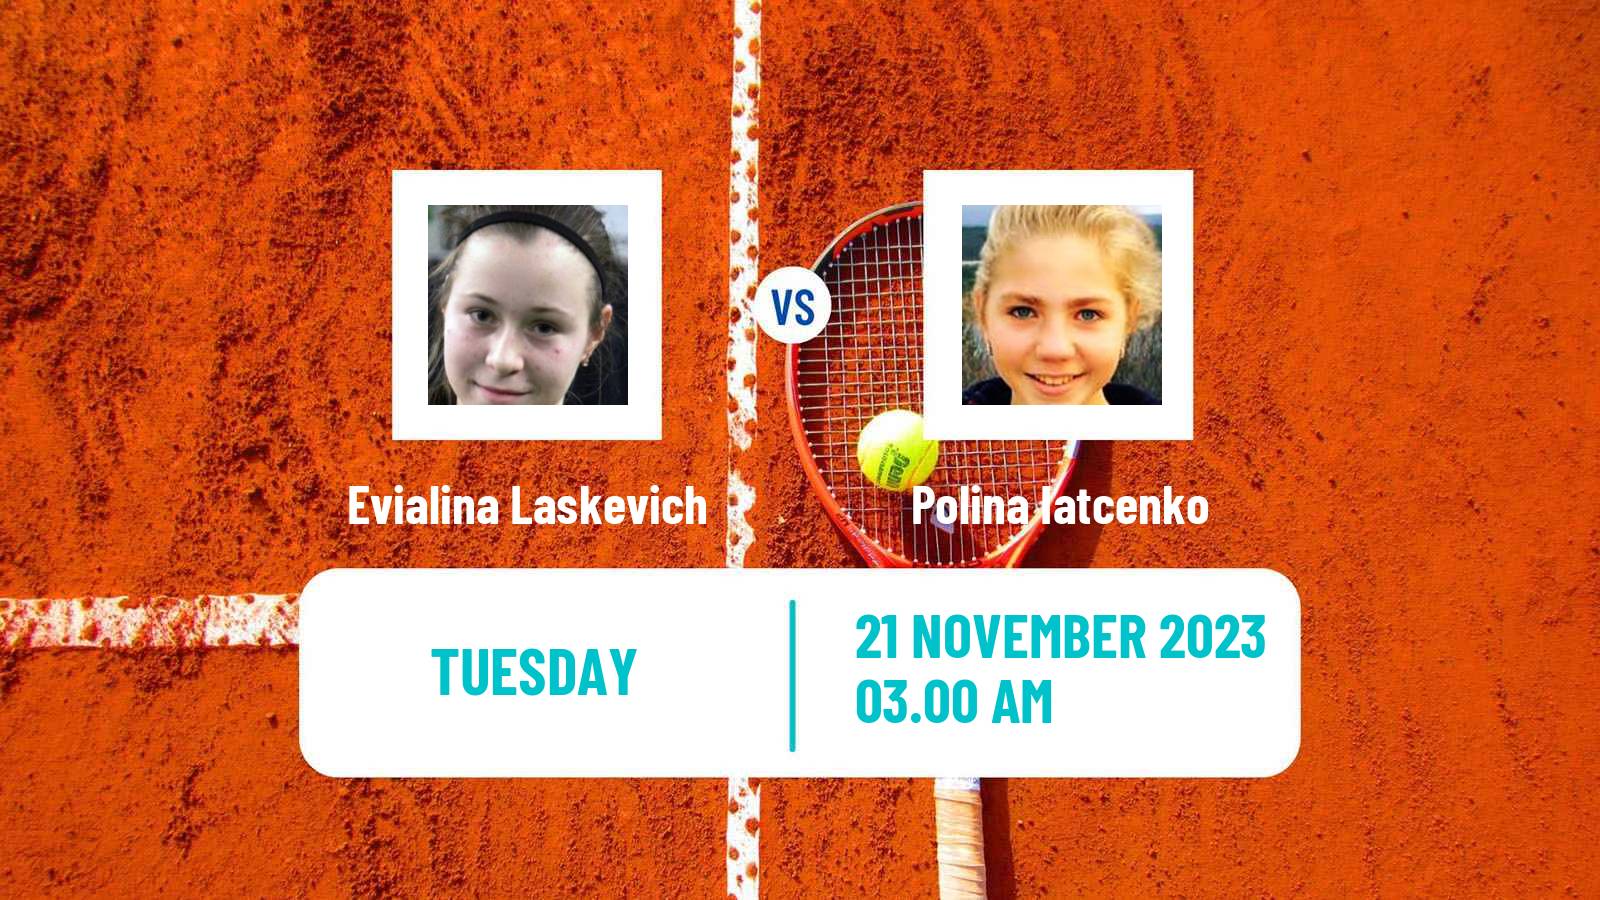 Tennis ITF W25 Limassol Women 2023 Evialina Laskevich - Polina Iatcenko